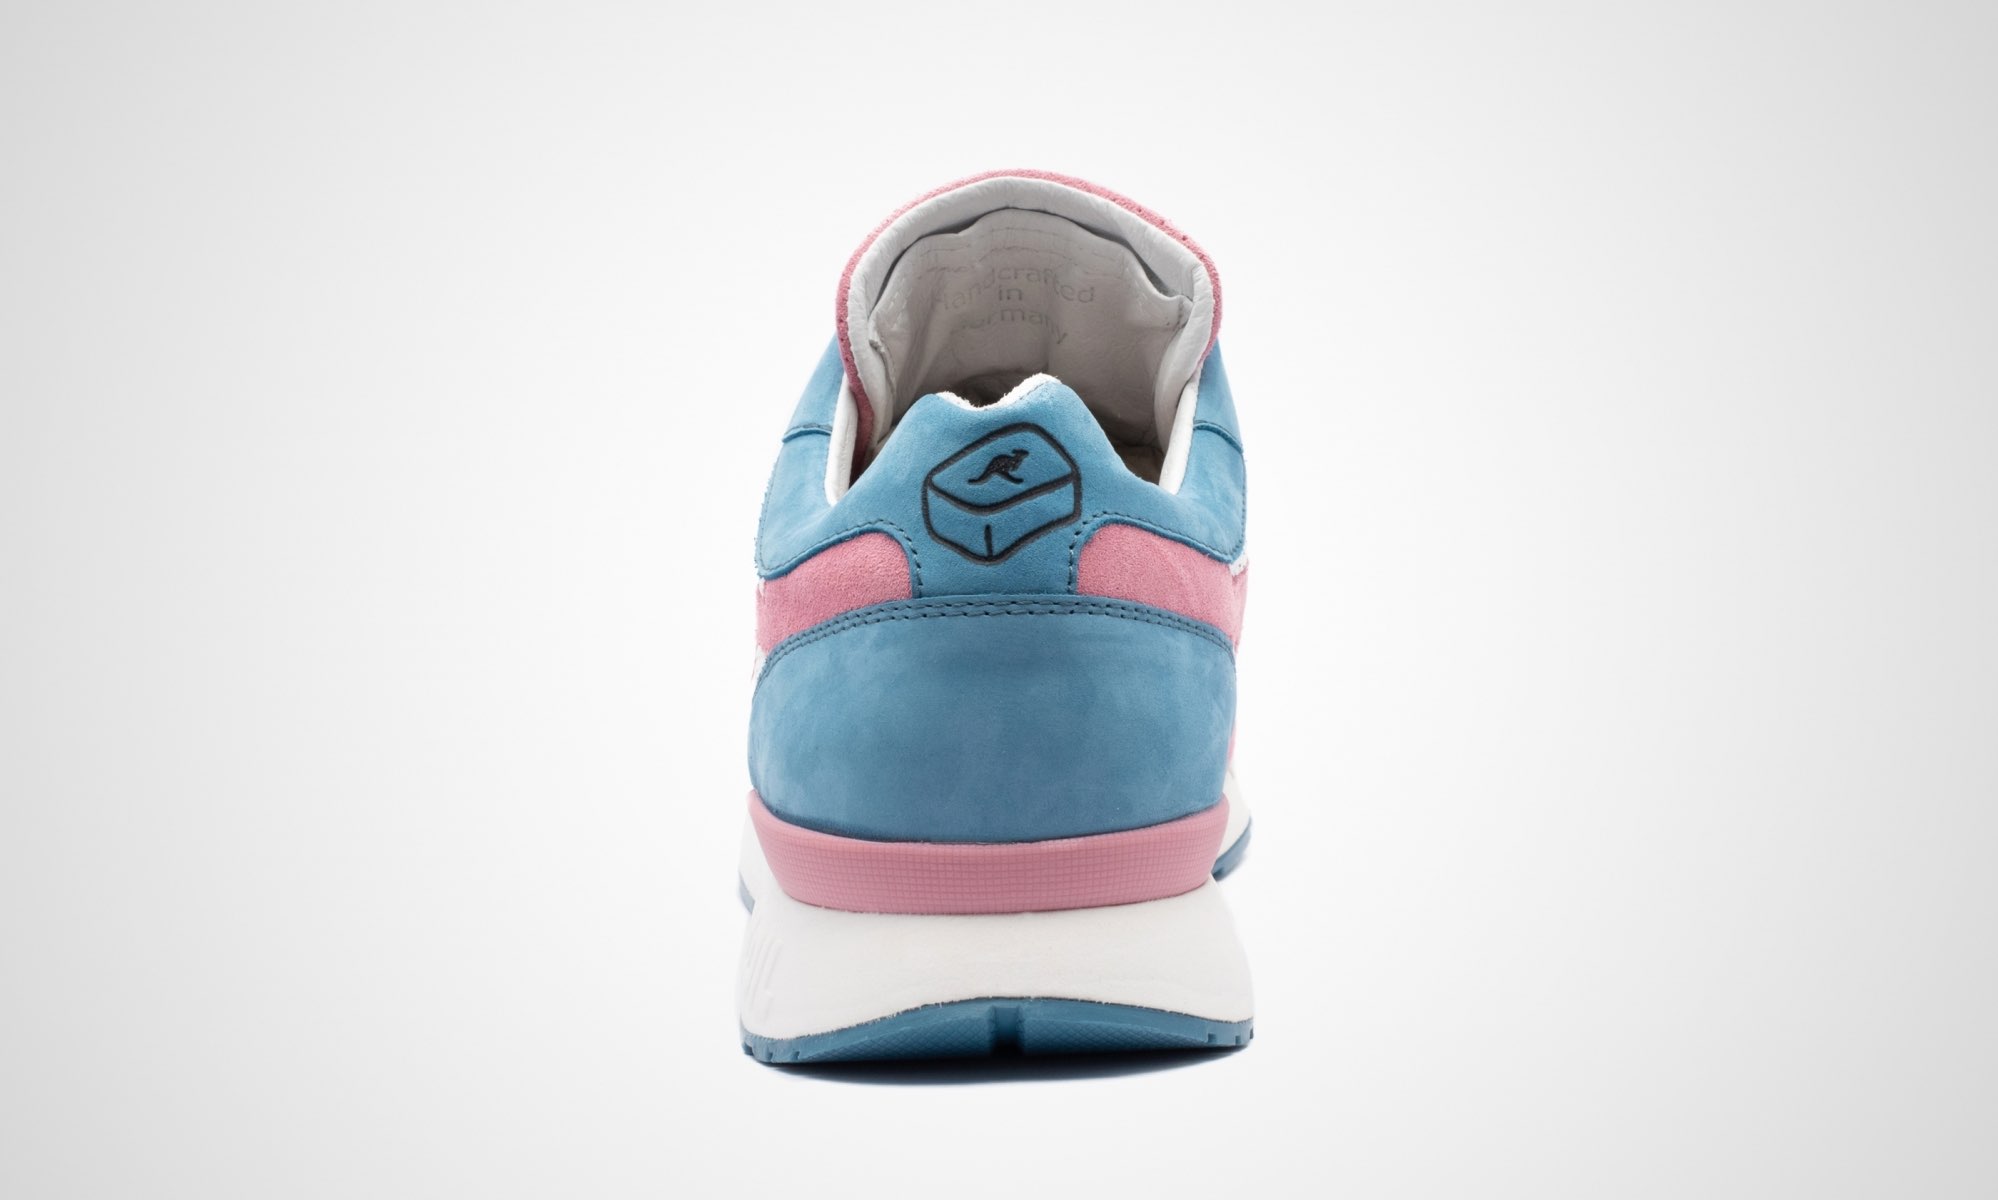 KangaROOS x Sneakerholics
Coil-R1 « Bubblegum »